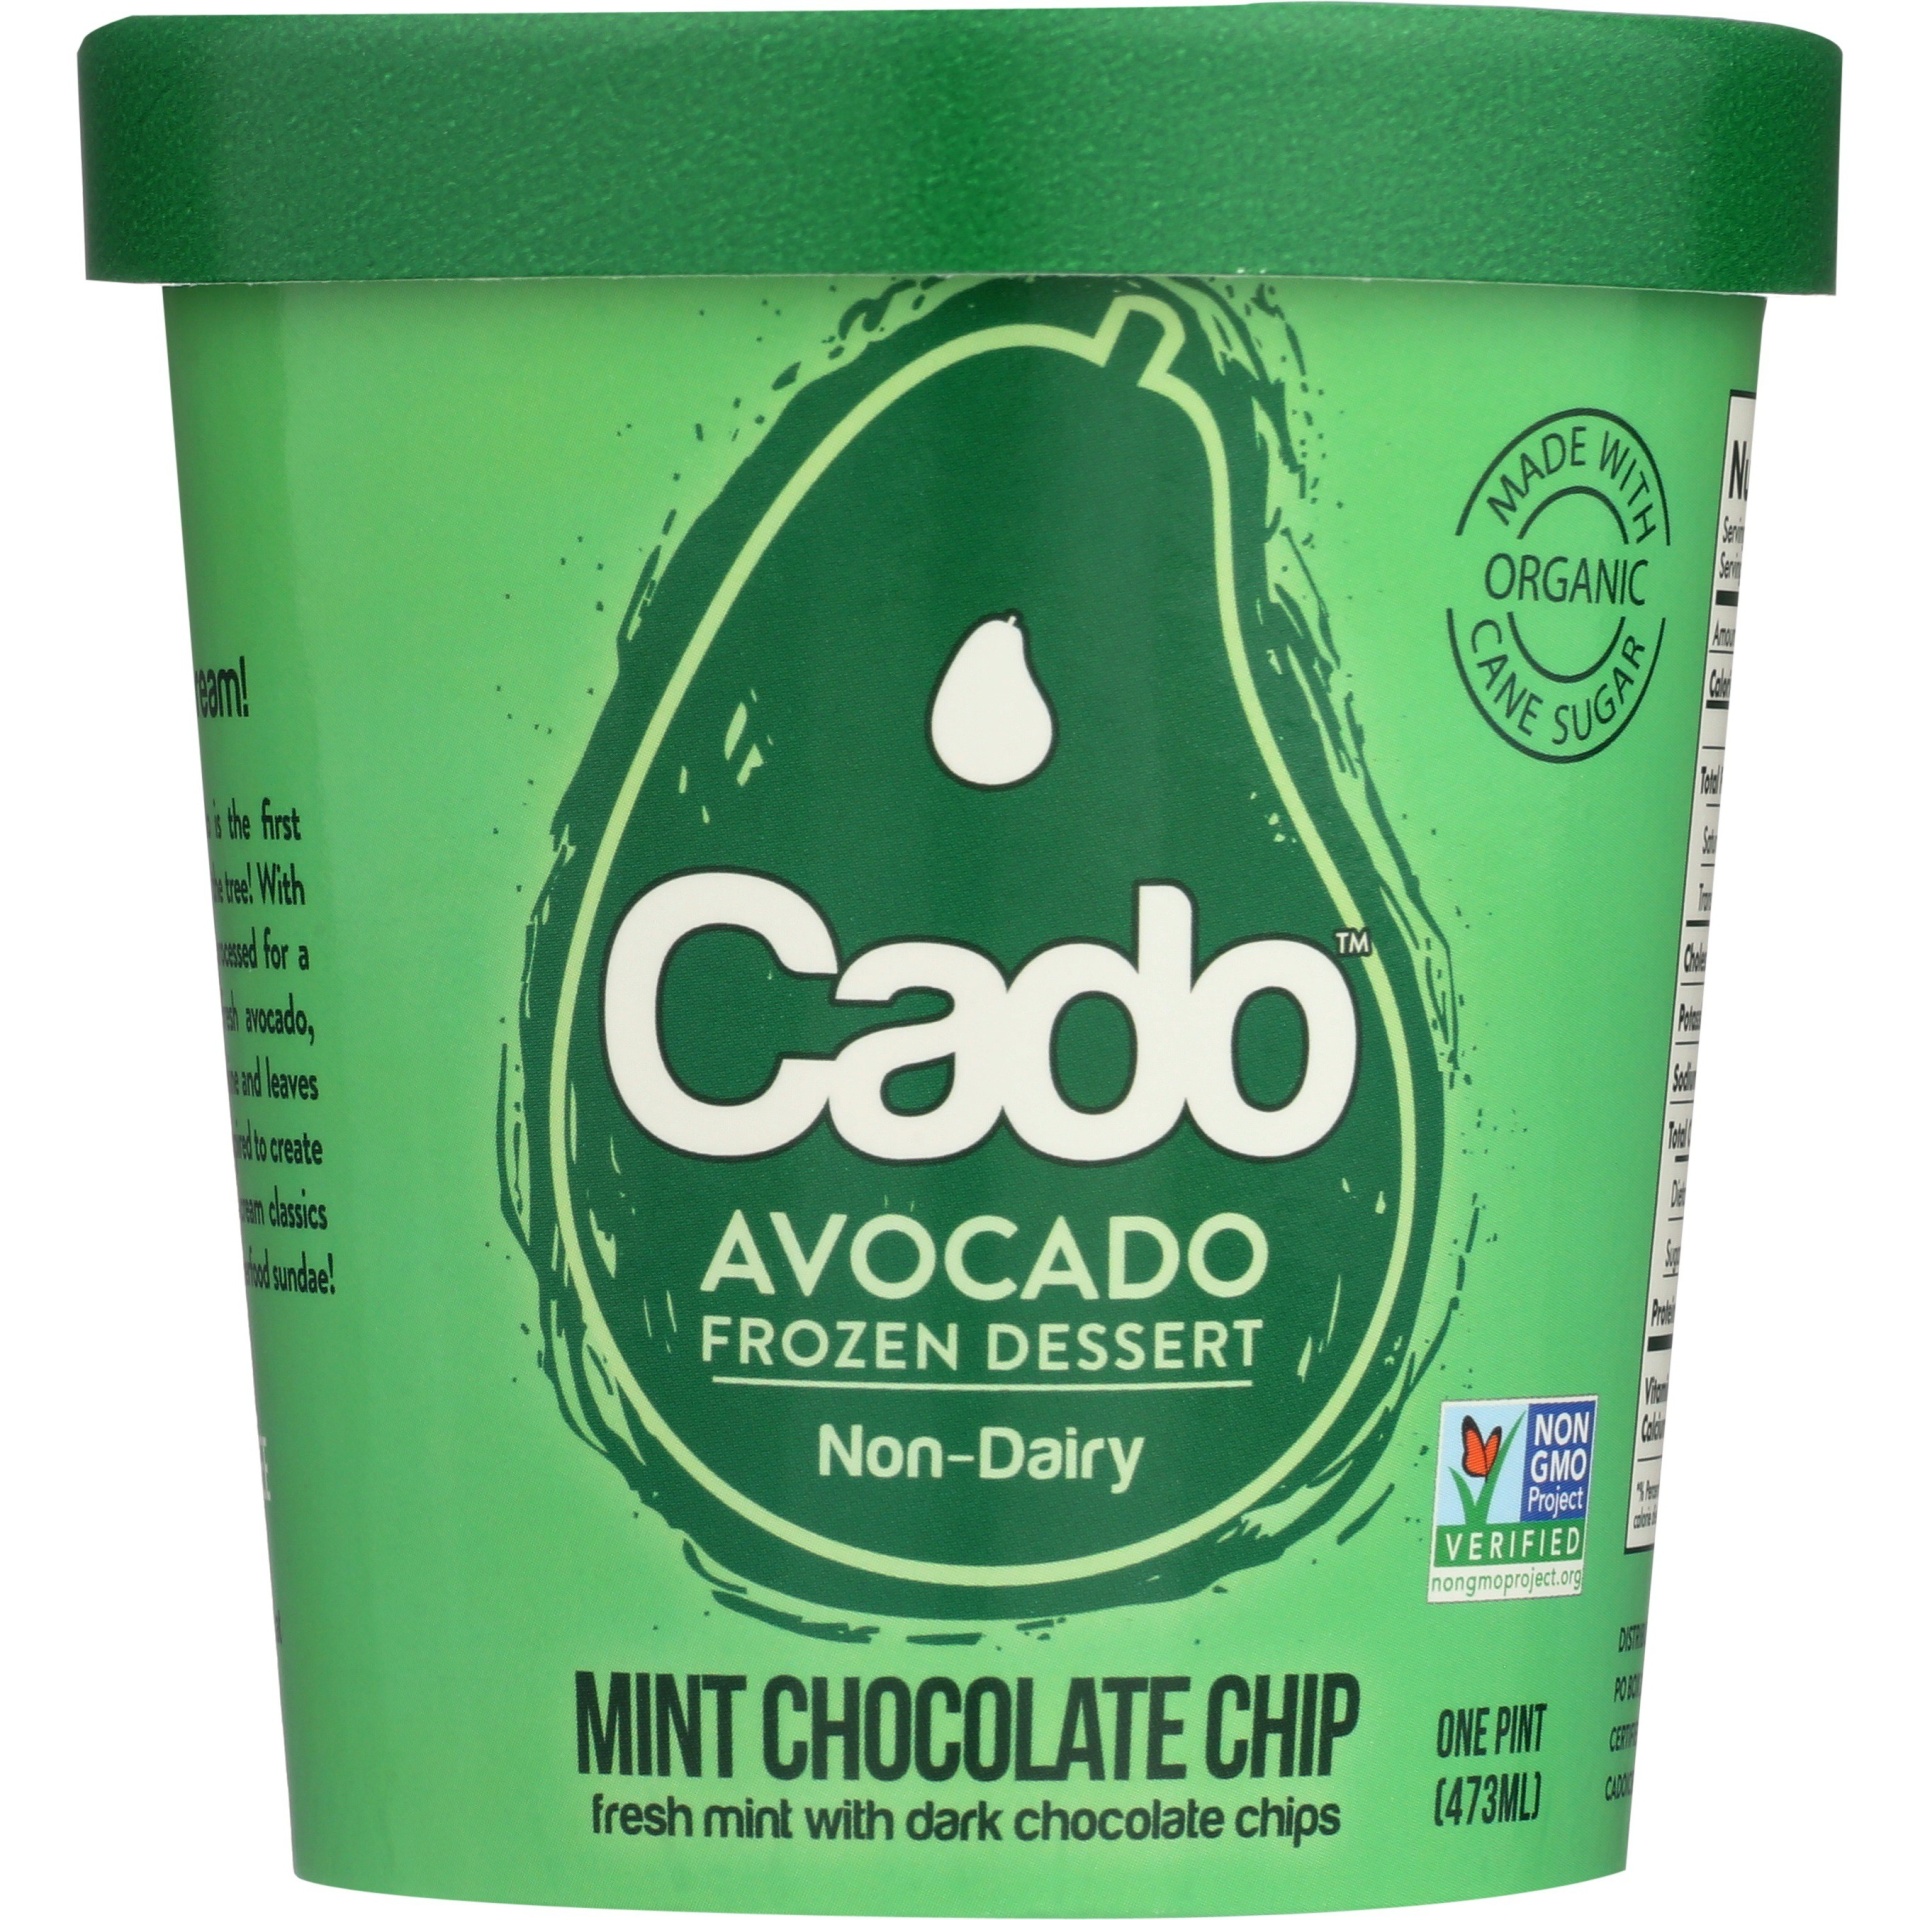 slide 1 of 4, Cado Non-Dairy Avocado Frozen Dessert - Mint Chocolate Chip, 1 pint